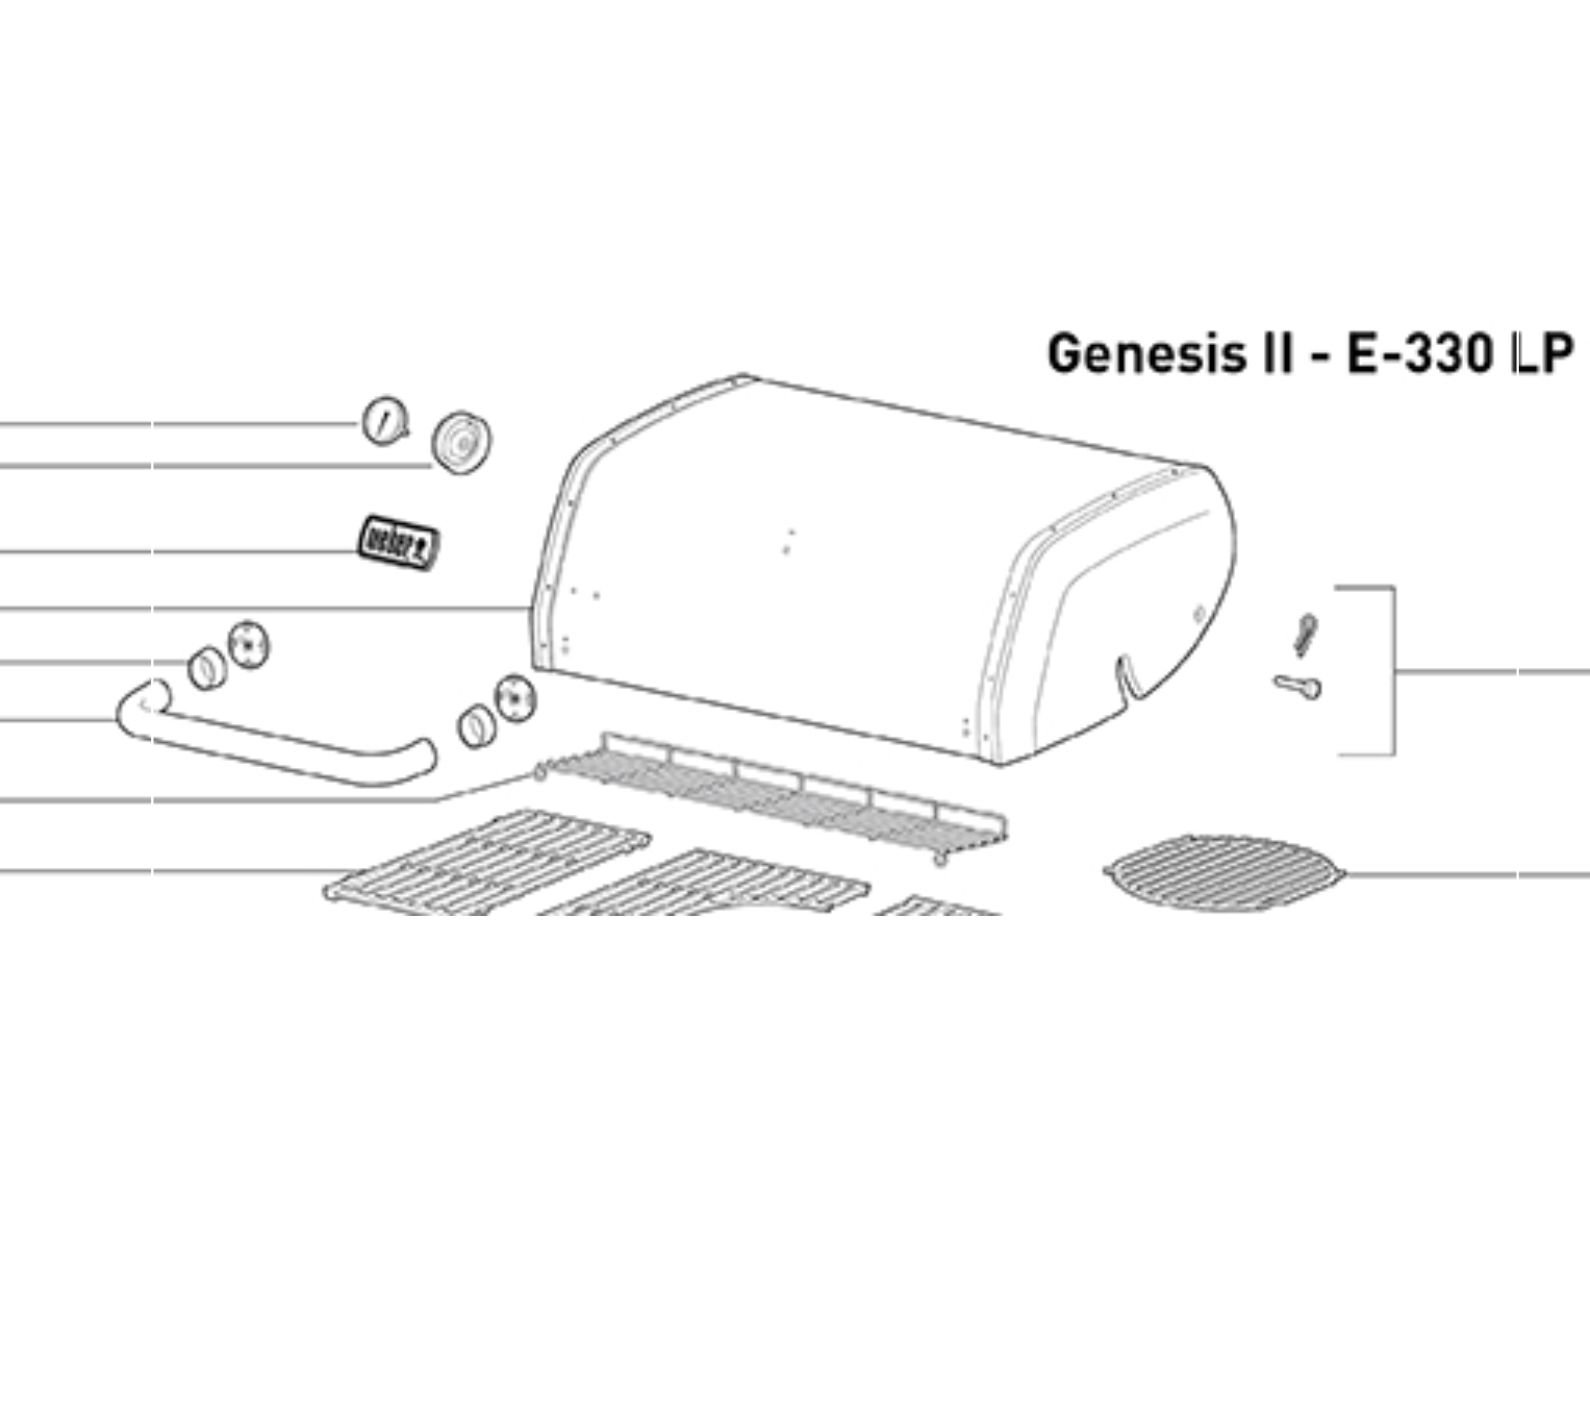 Deckel Lid assembly 3B Genesis 19,Black